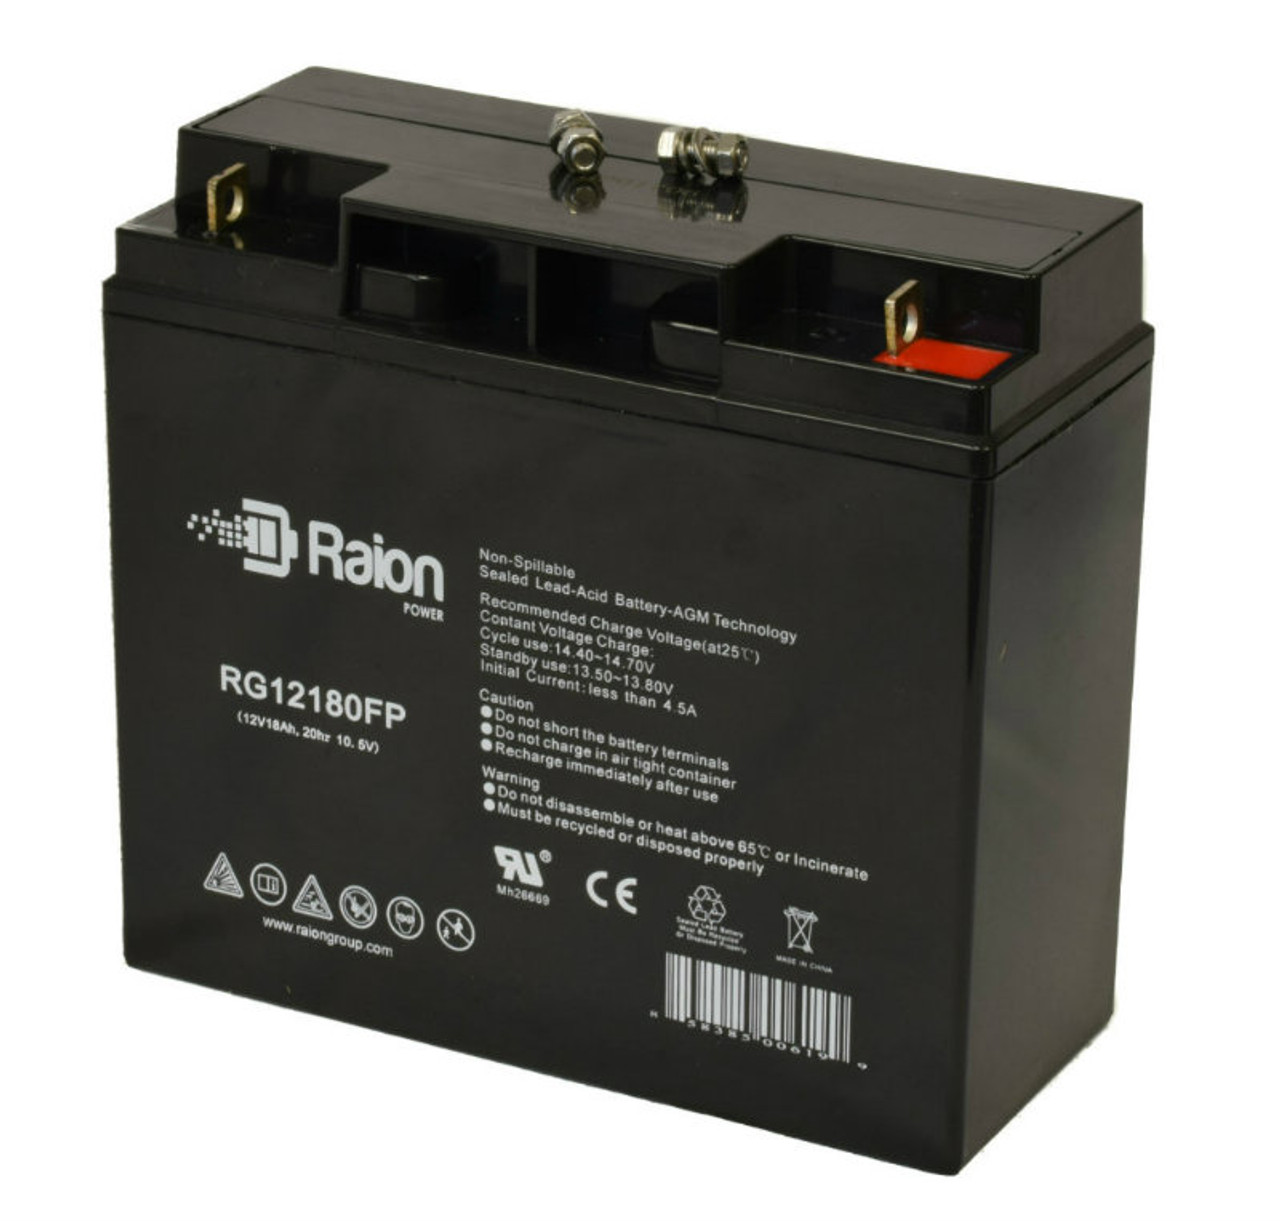 Raion Power Replacement 12V 18Ah Battery for Sonnenschein 0889556500 - 1 Pack